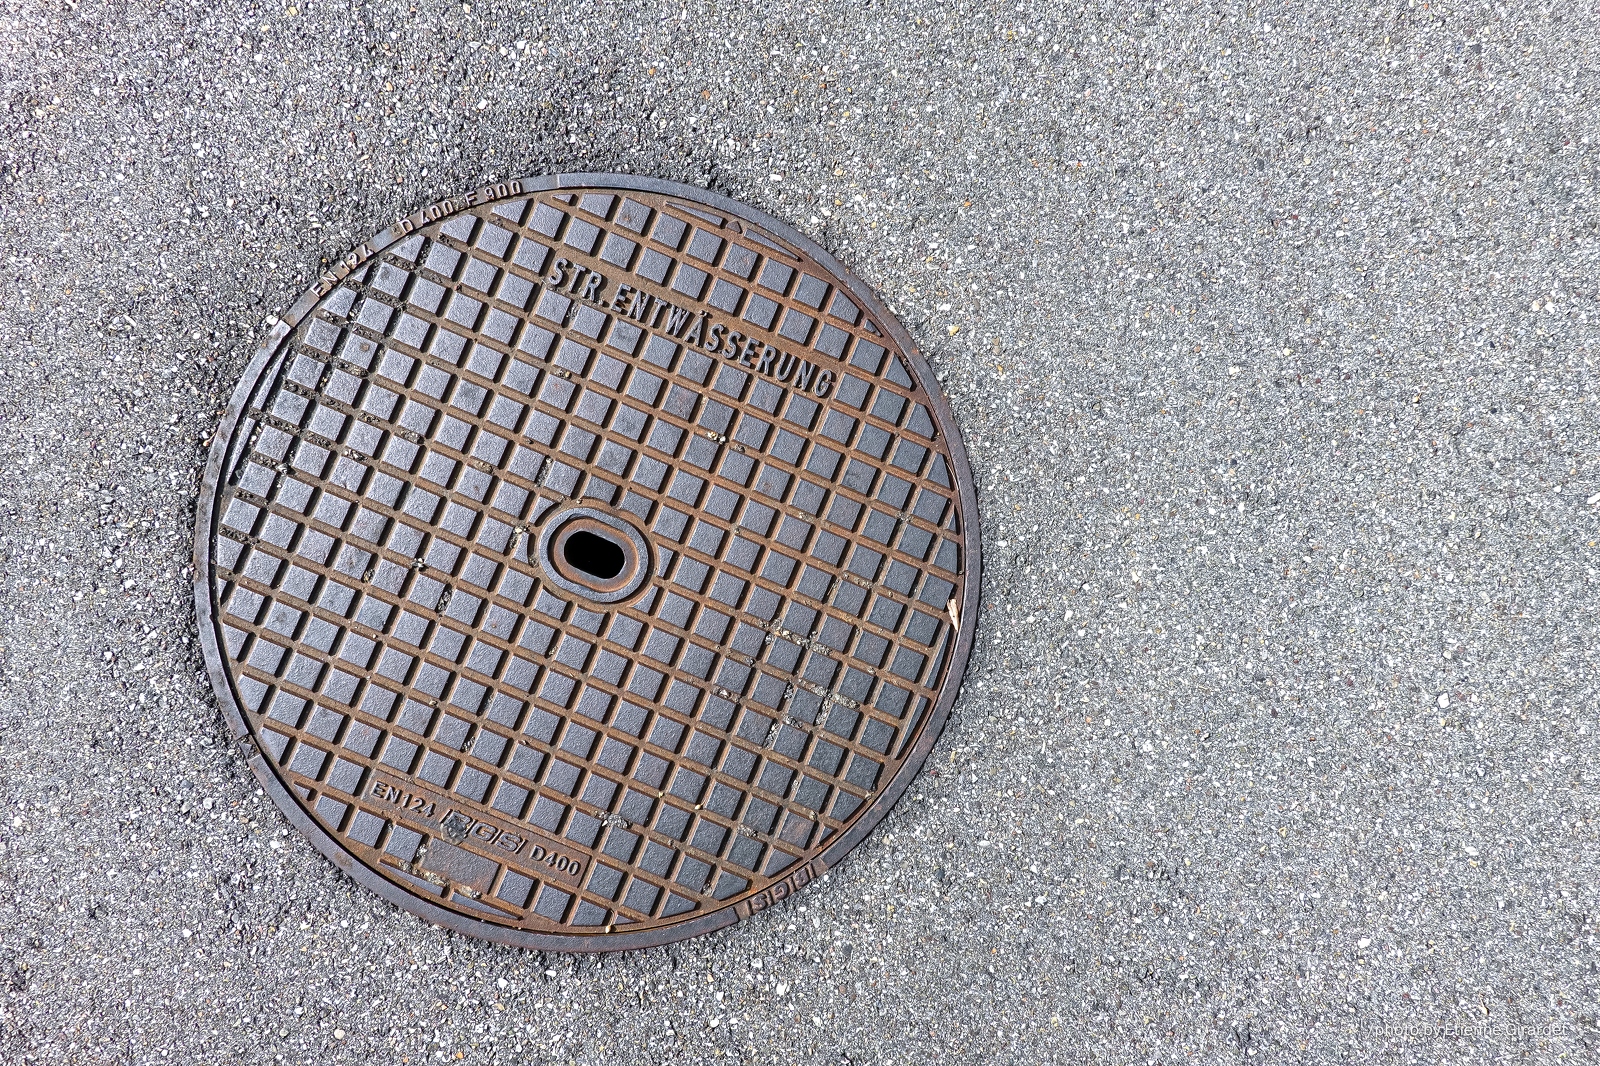 201807_28_RXX0753-manhole-cover--by-E-Girardet.jpg